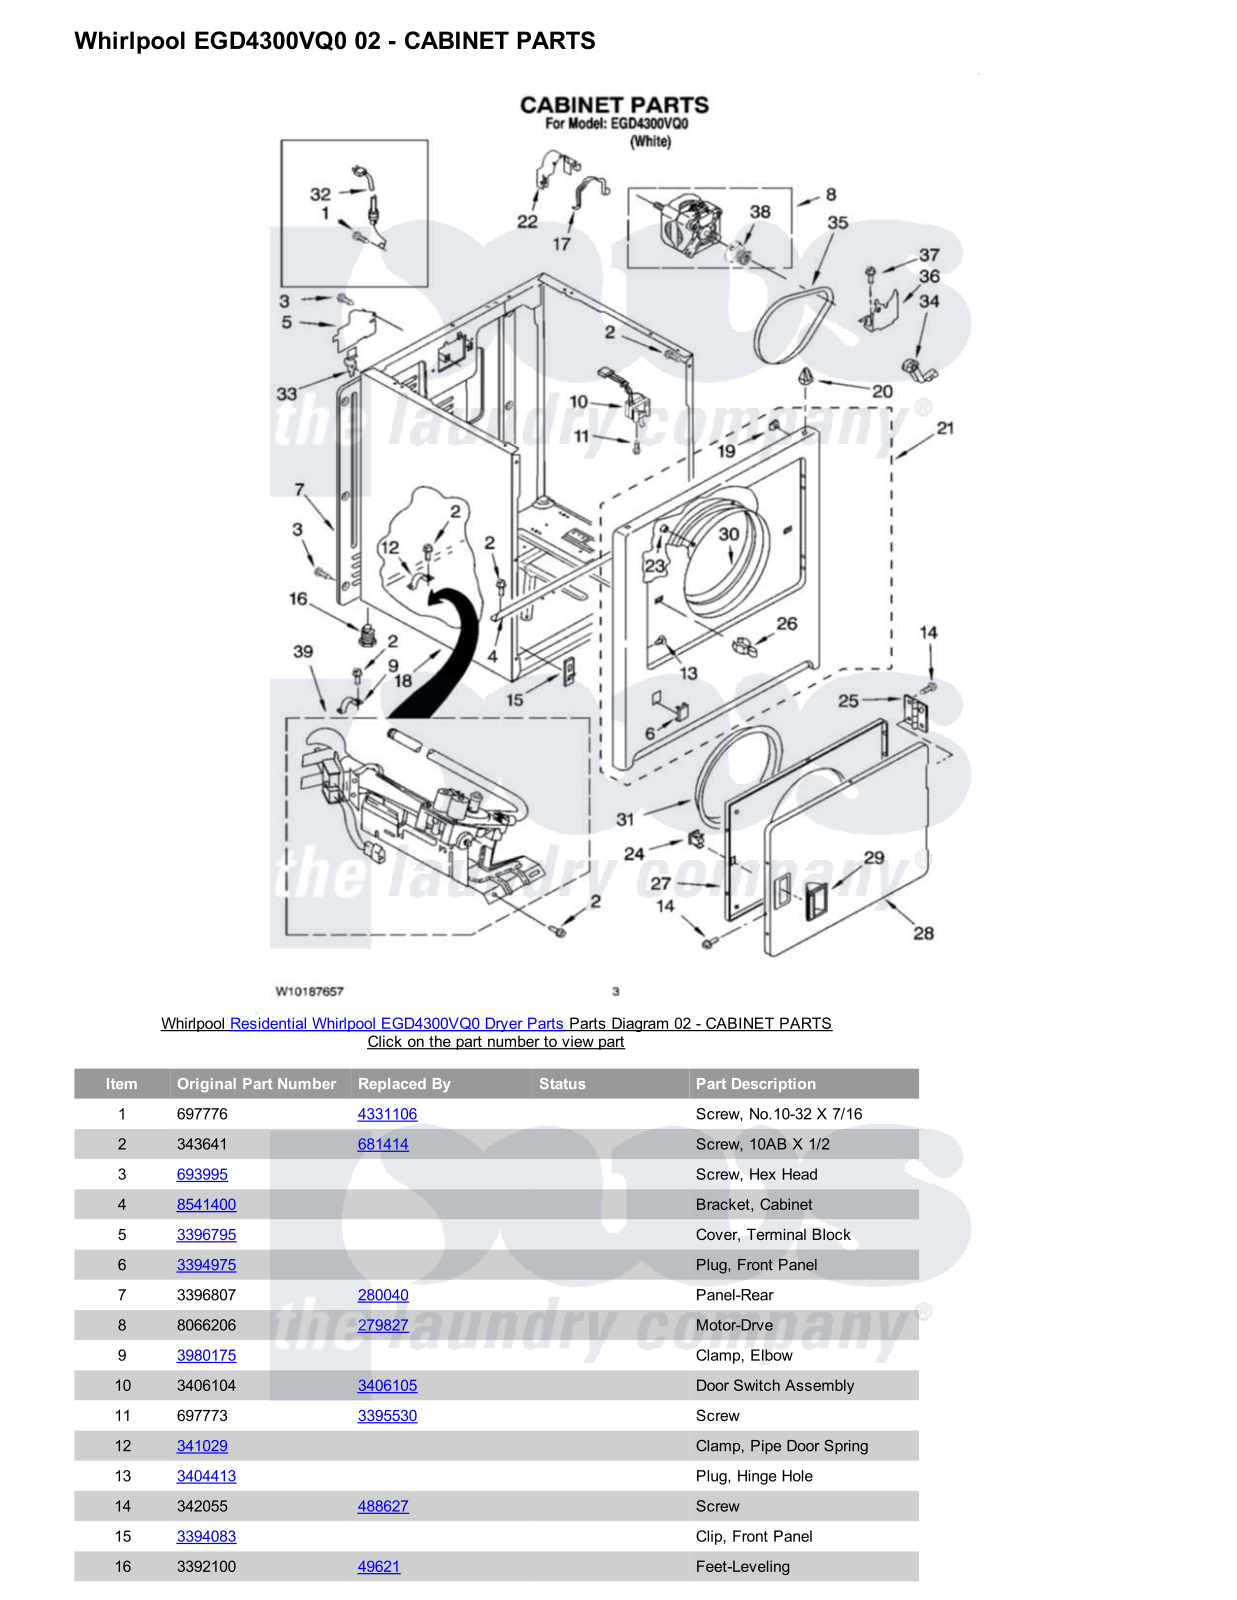 Whirlpool EGD4300VQ0 Parts Diagram